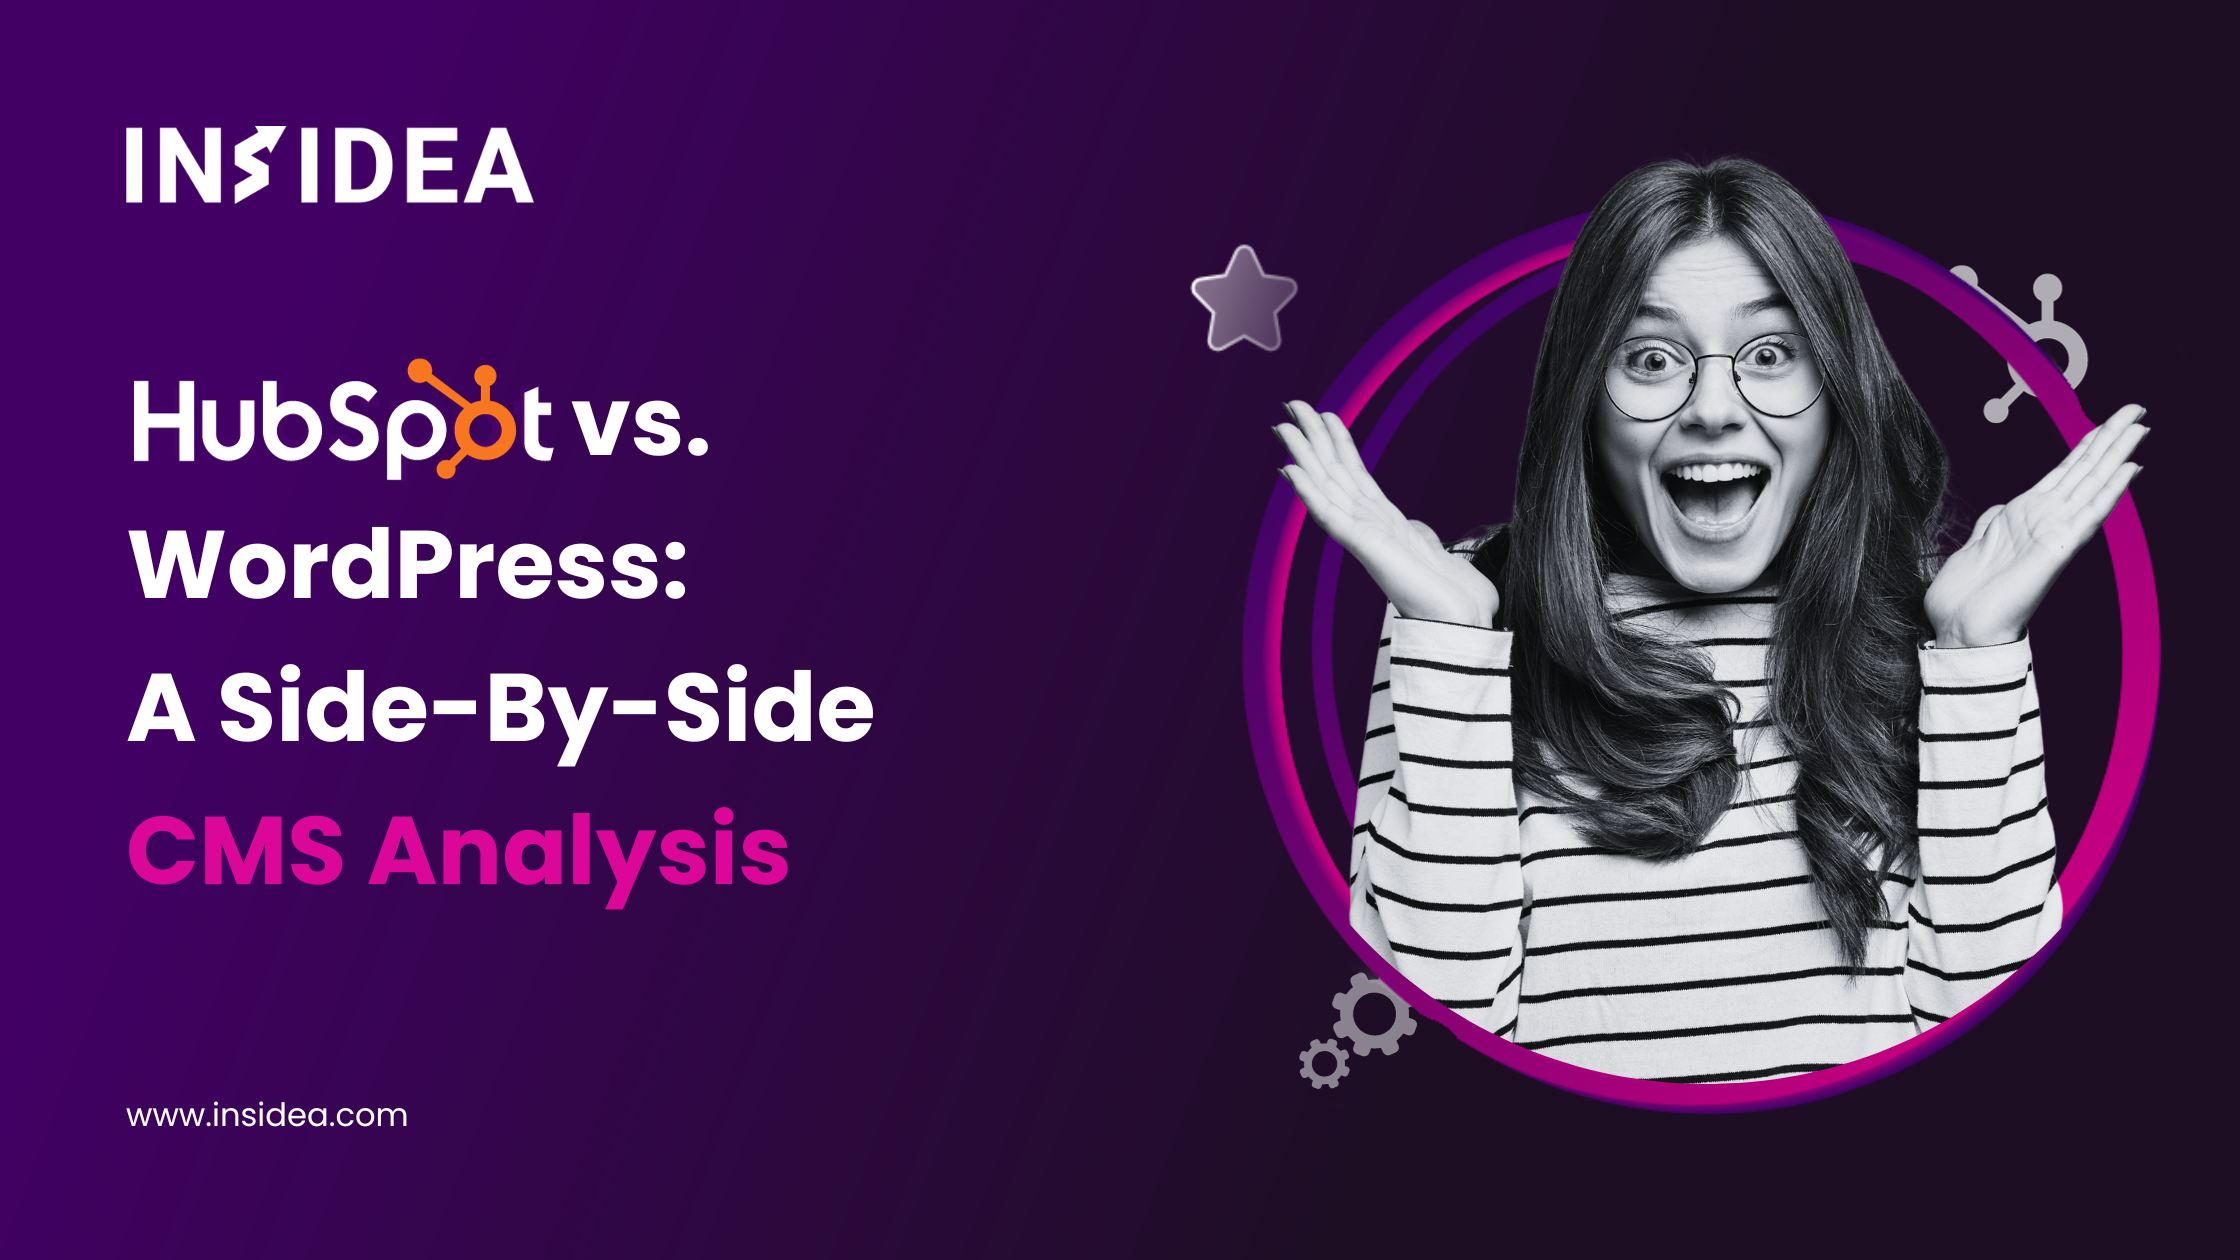 HubSpot vs. WordPress A Side-By-Side CMS Analysis